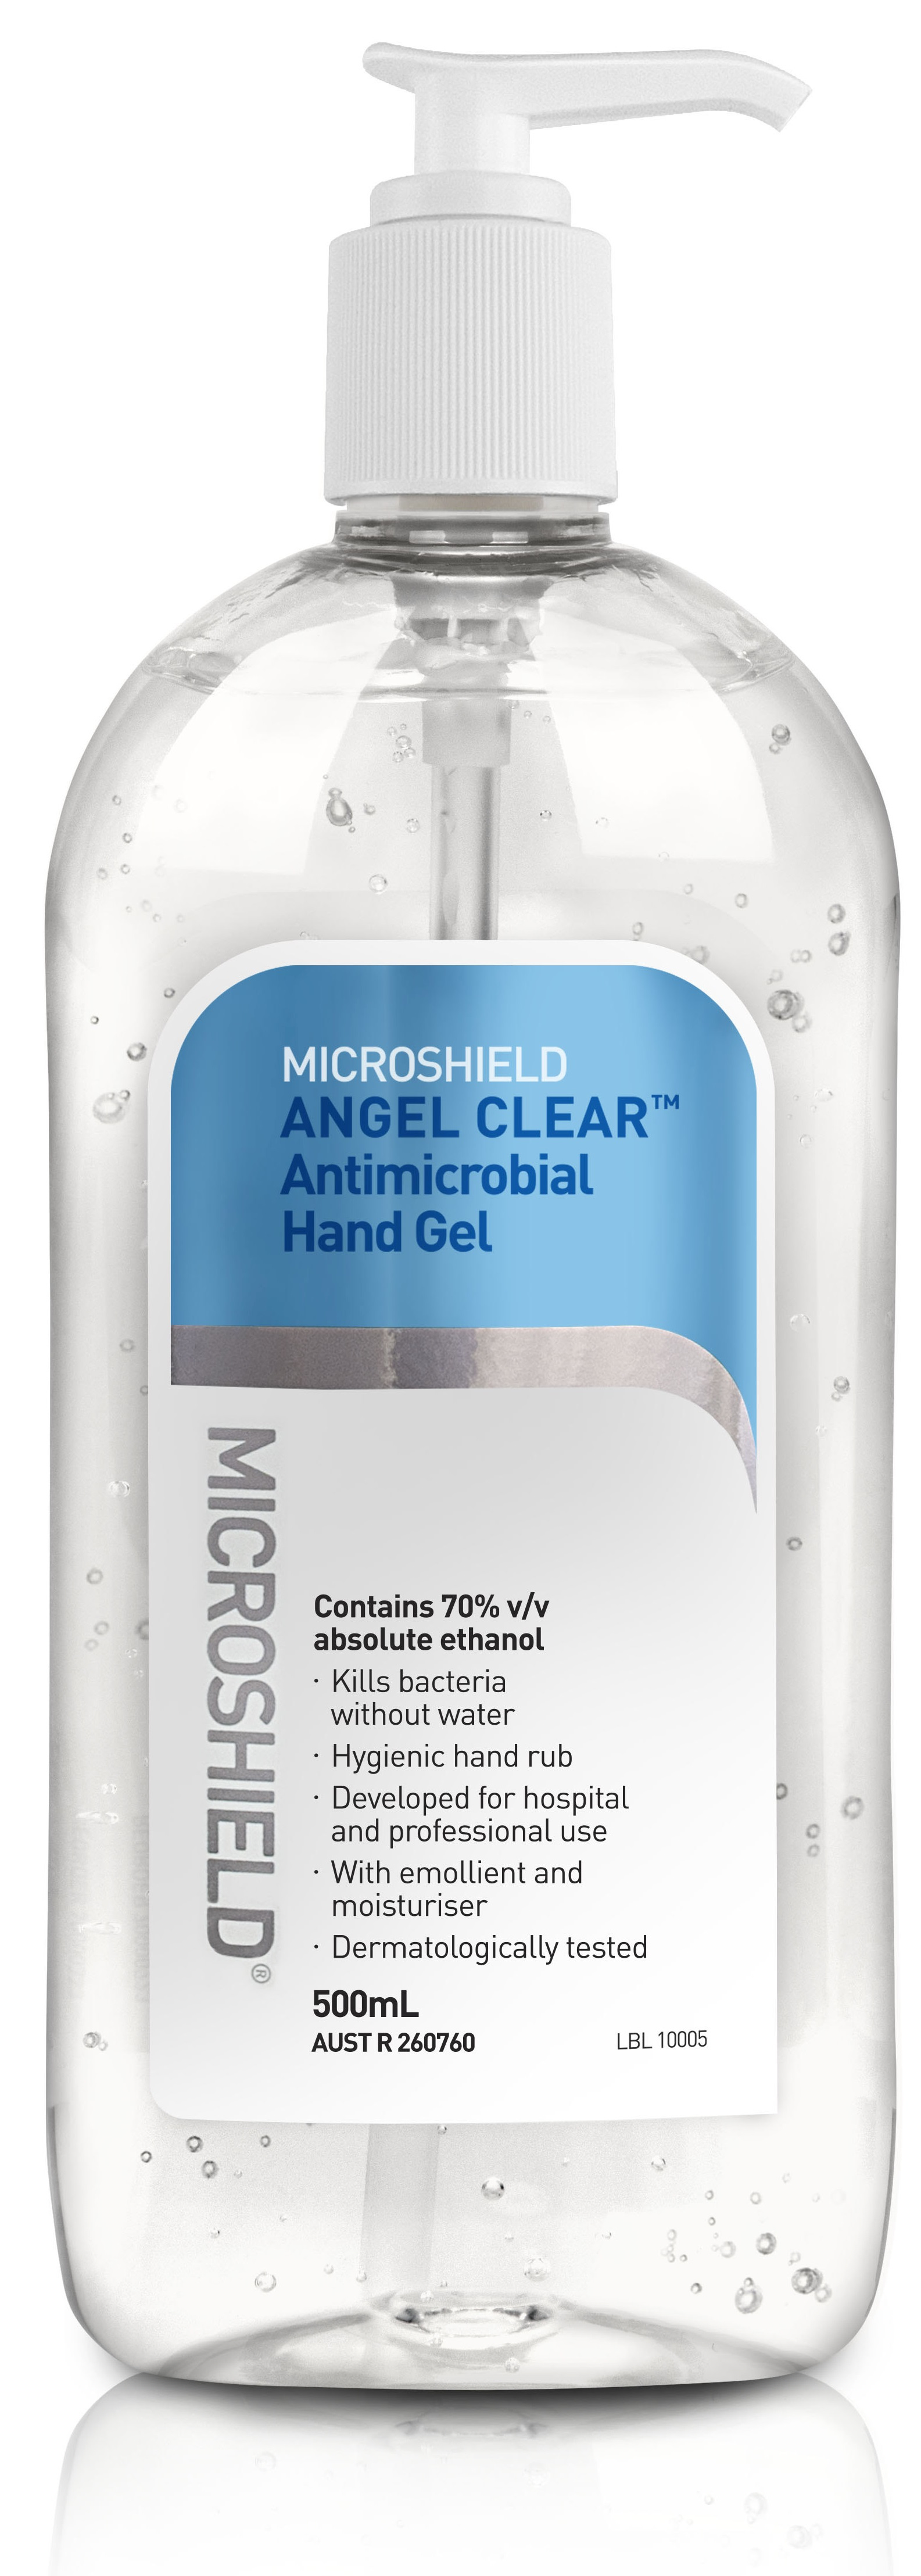 Microshield Angel Clear Antimicrobial Hand Gel 500ml image 0